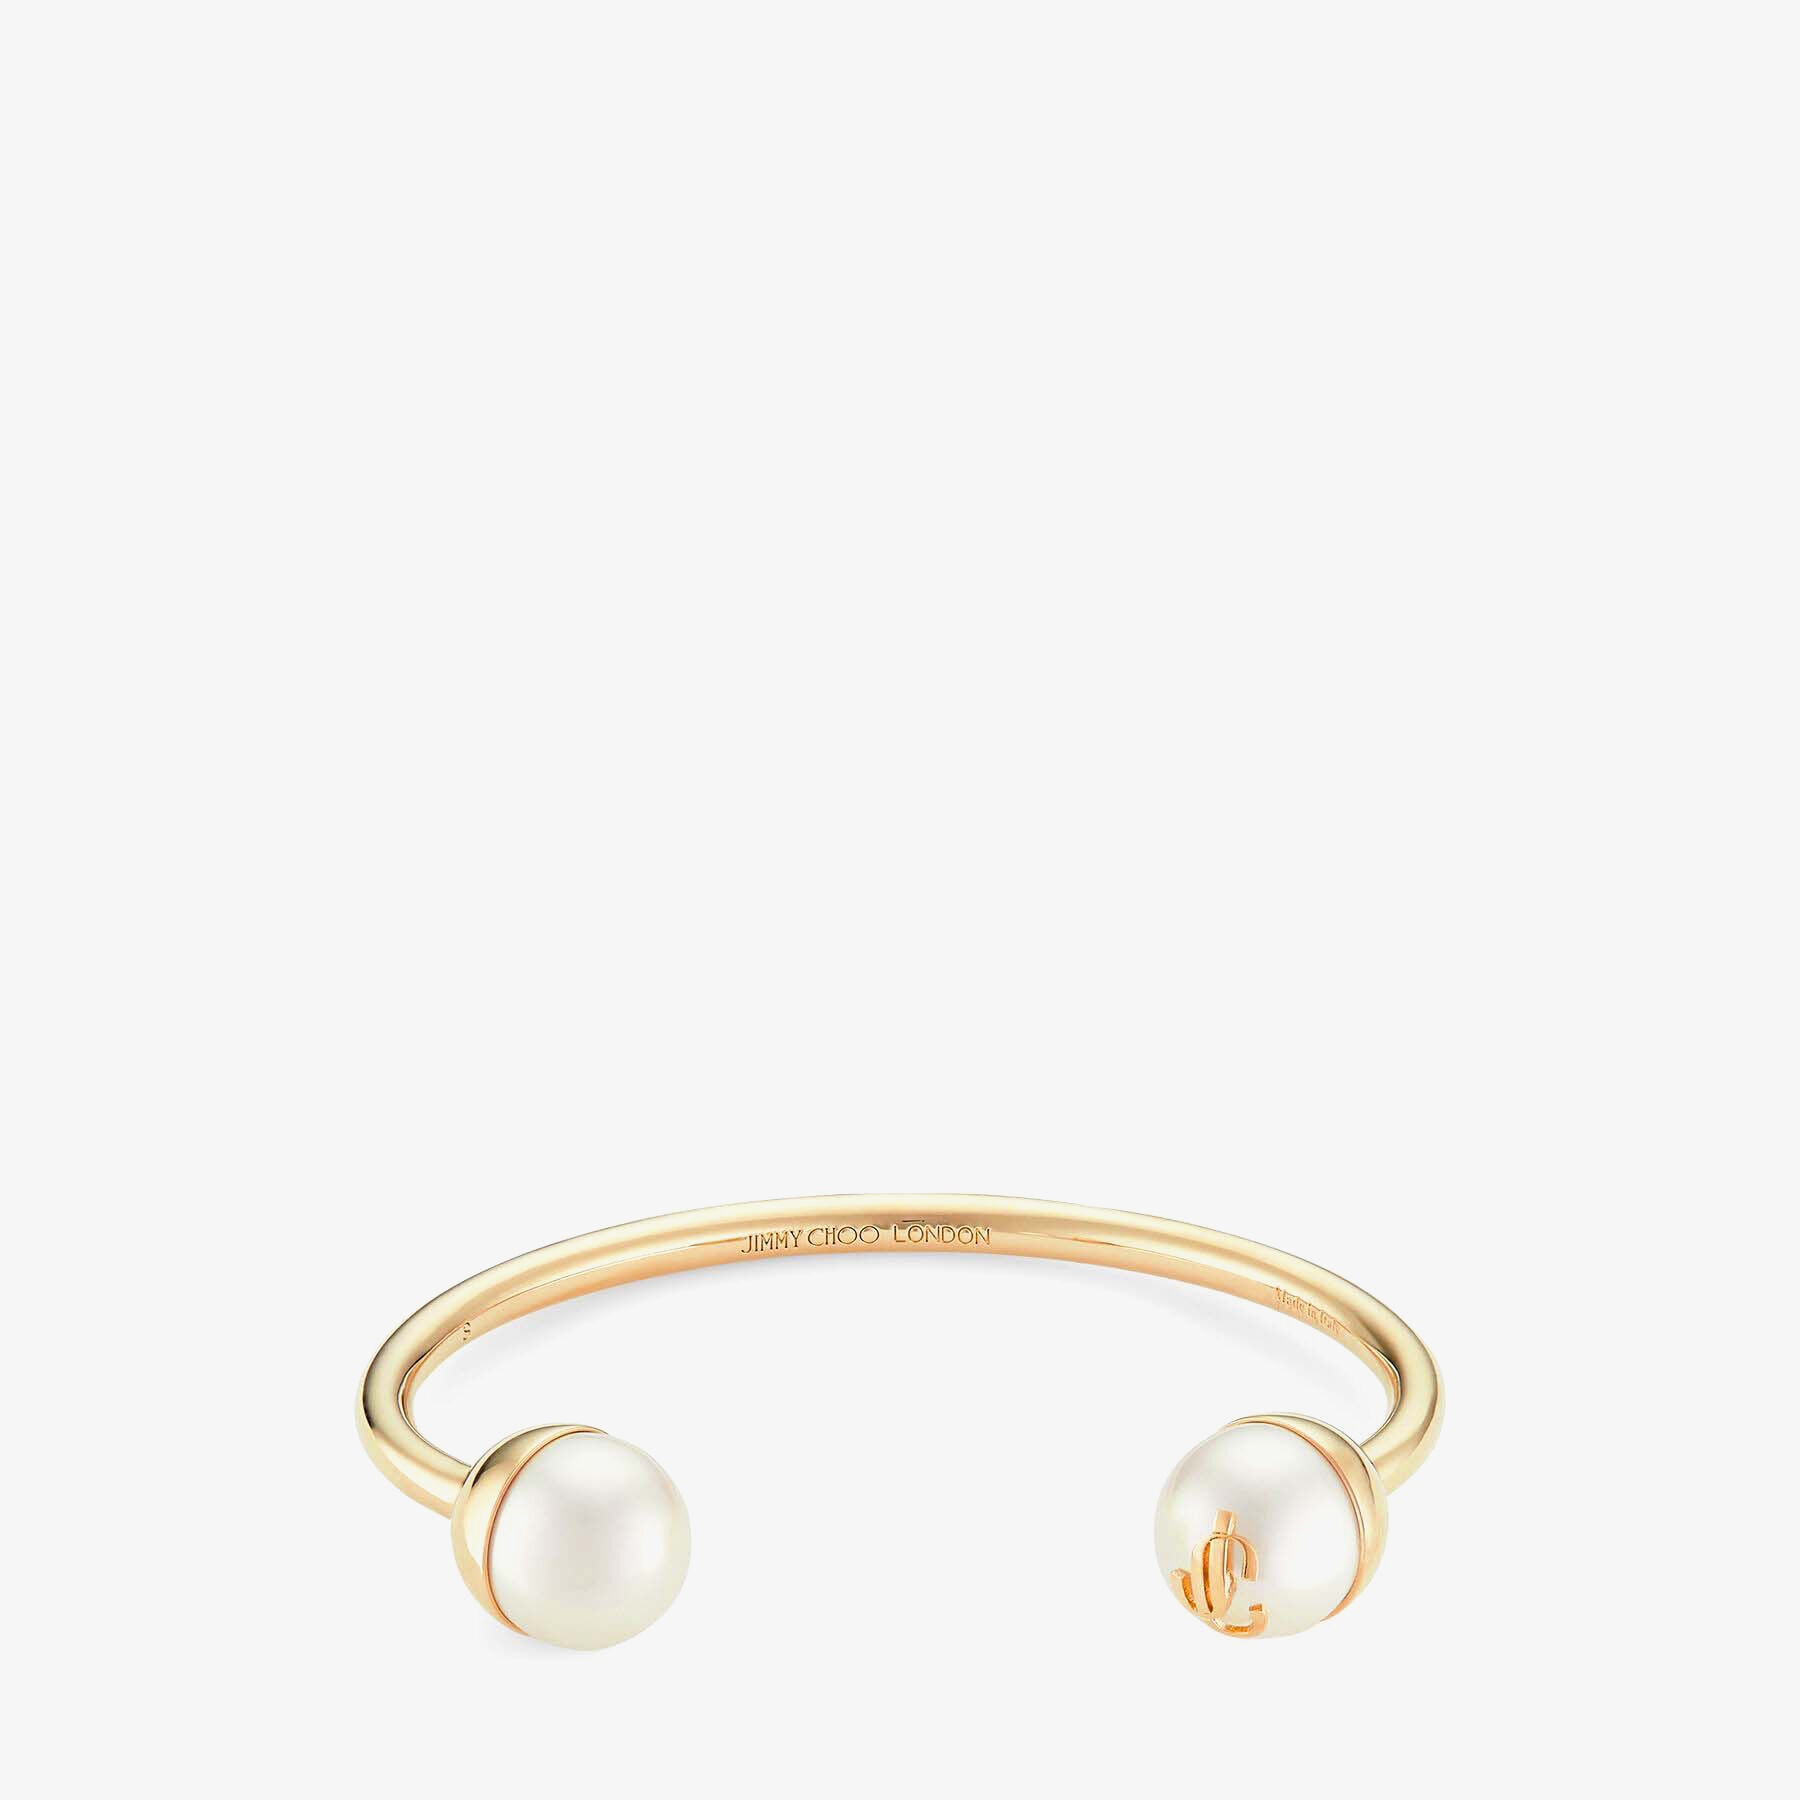 JC Pearl Cuff
Gold-Finish Metal Cuff Bracelet with Pearls - 1